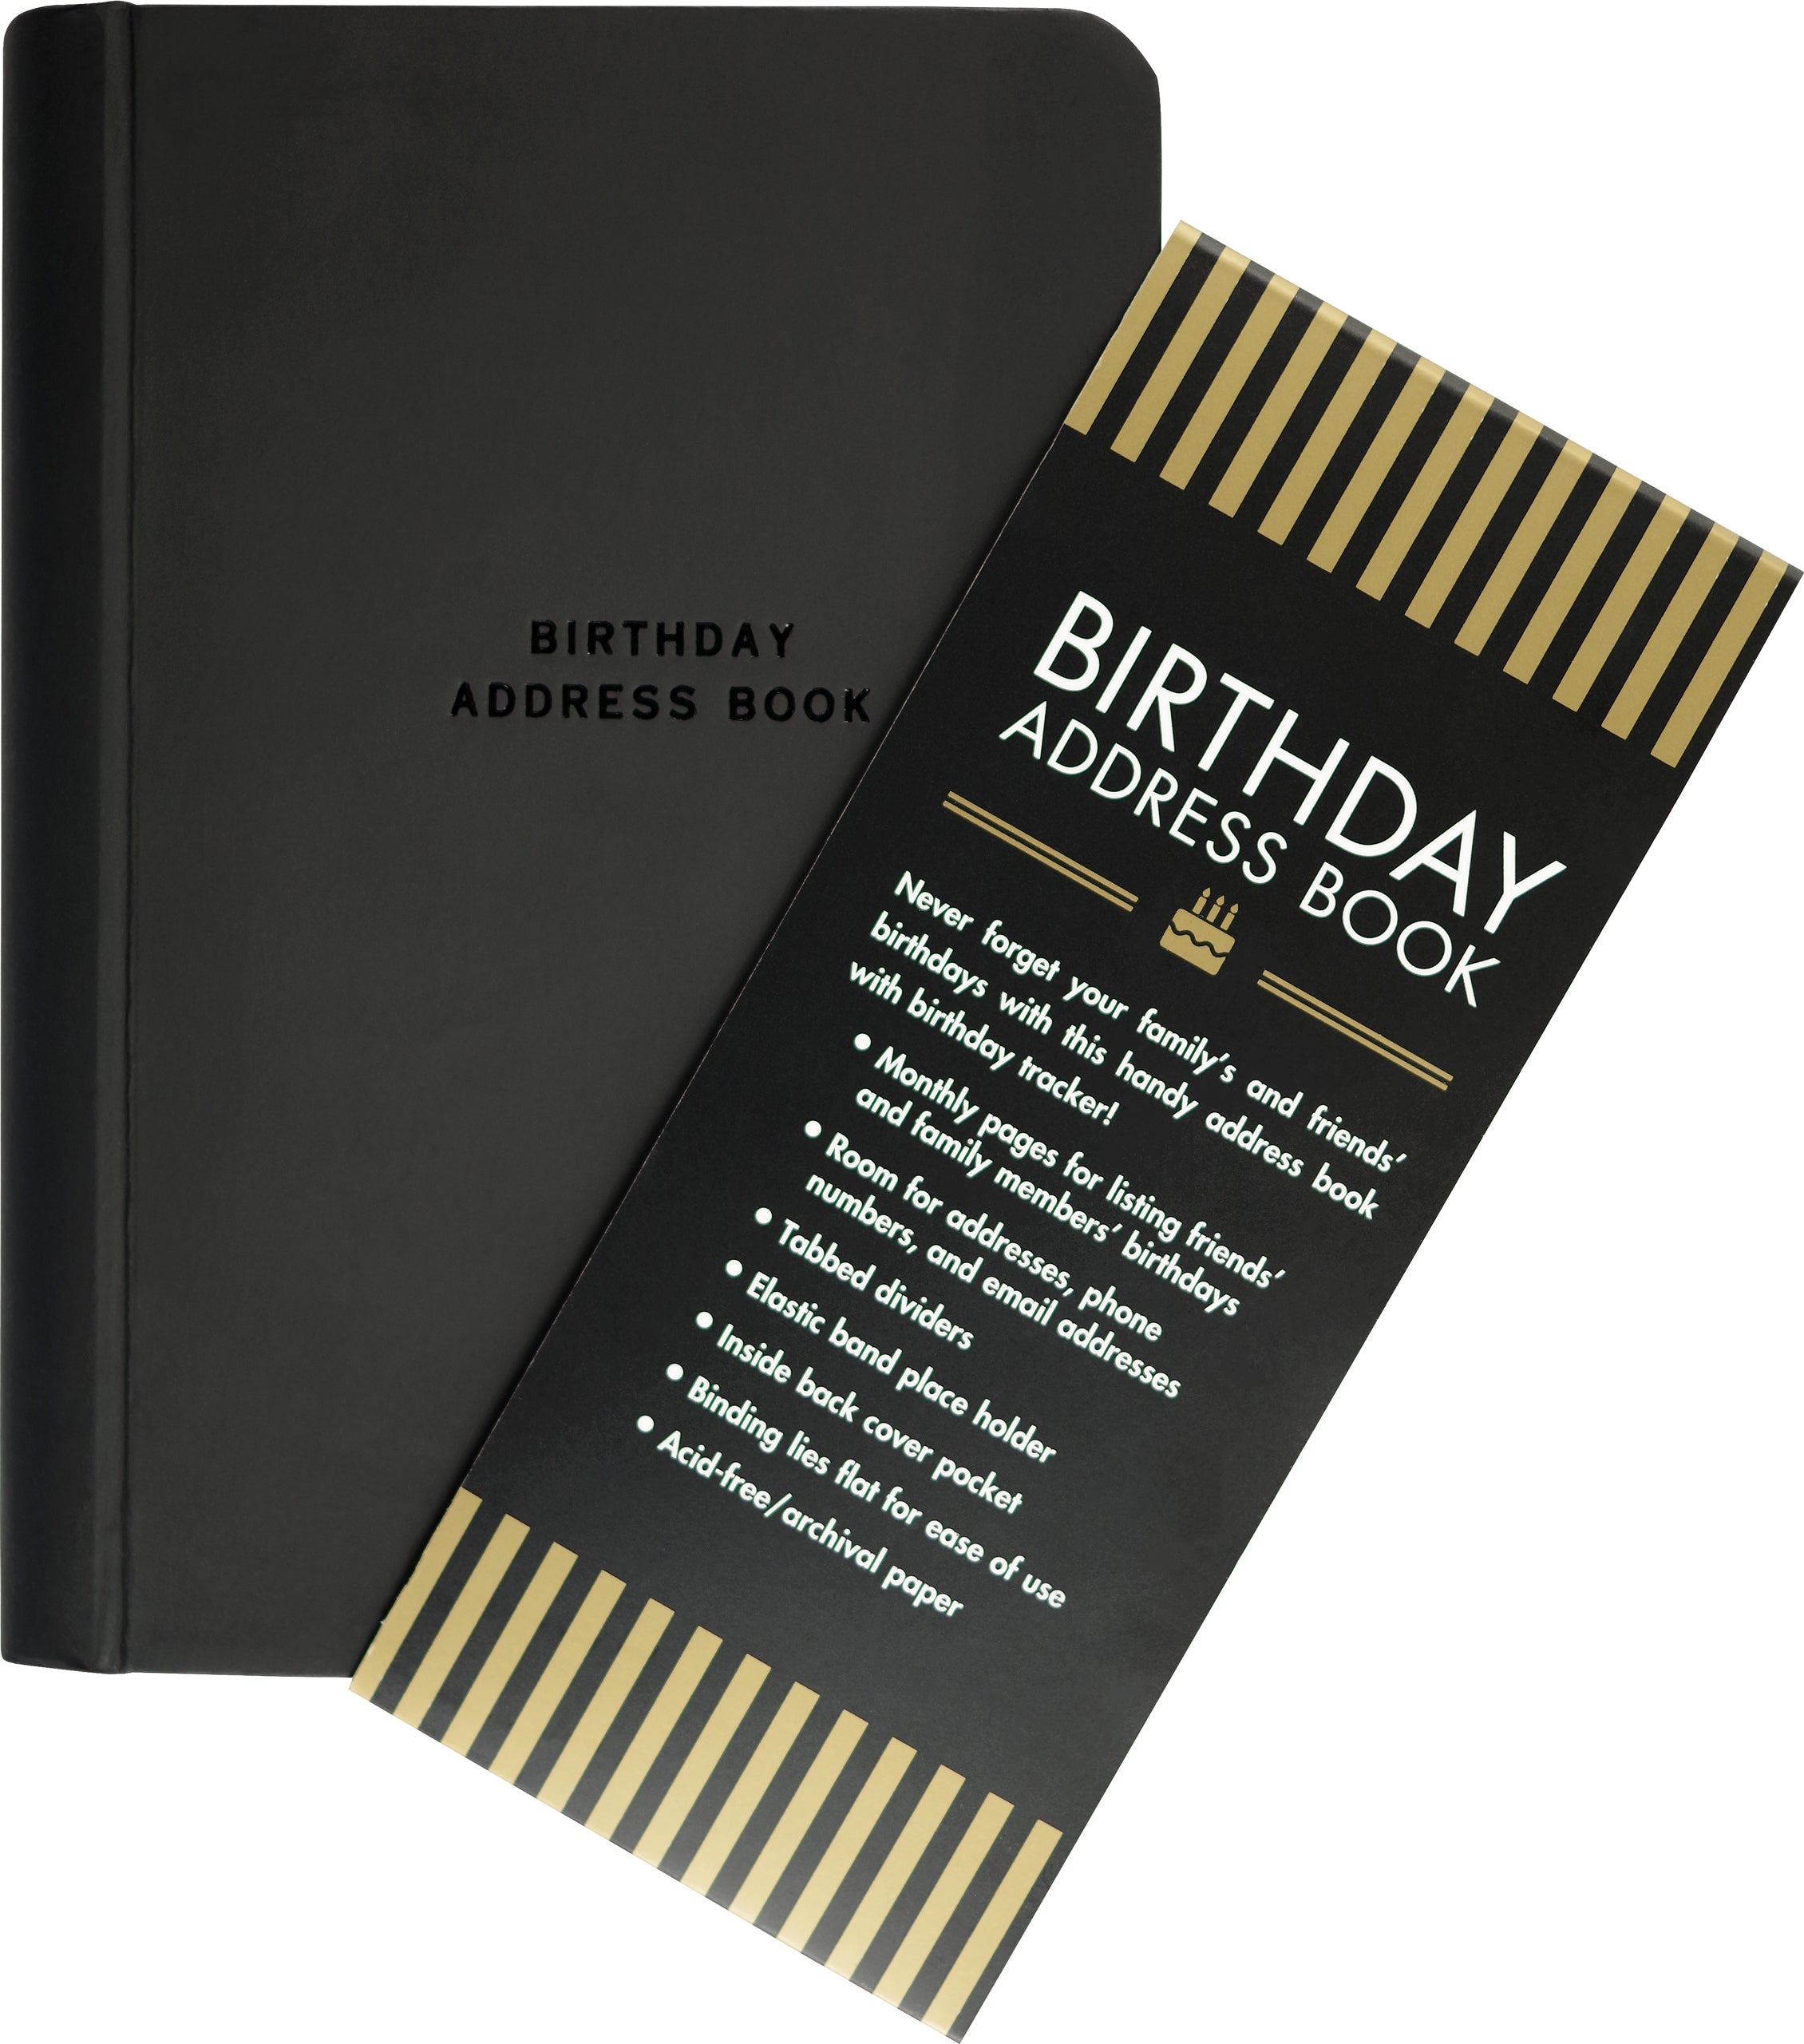 Little Address Book - Birthday Book    